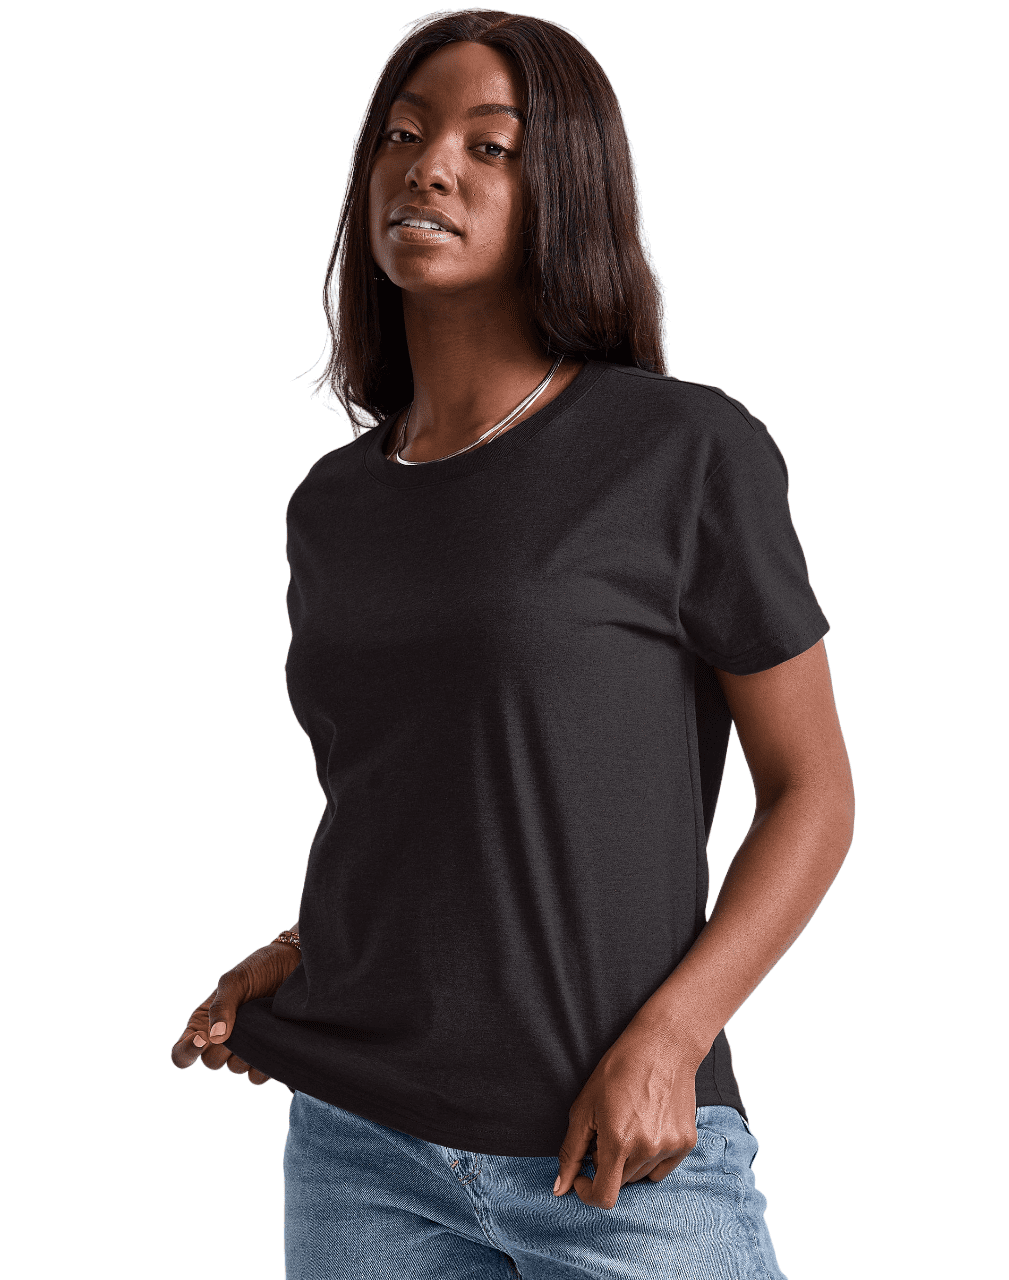 Hanes Originals Womens Relaxed Fit Tri-Blend T-Shirt